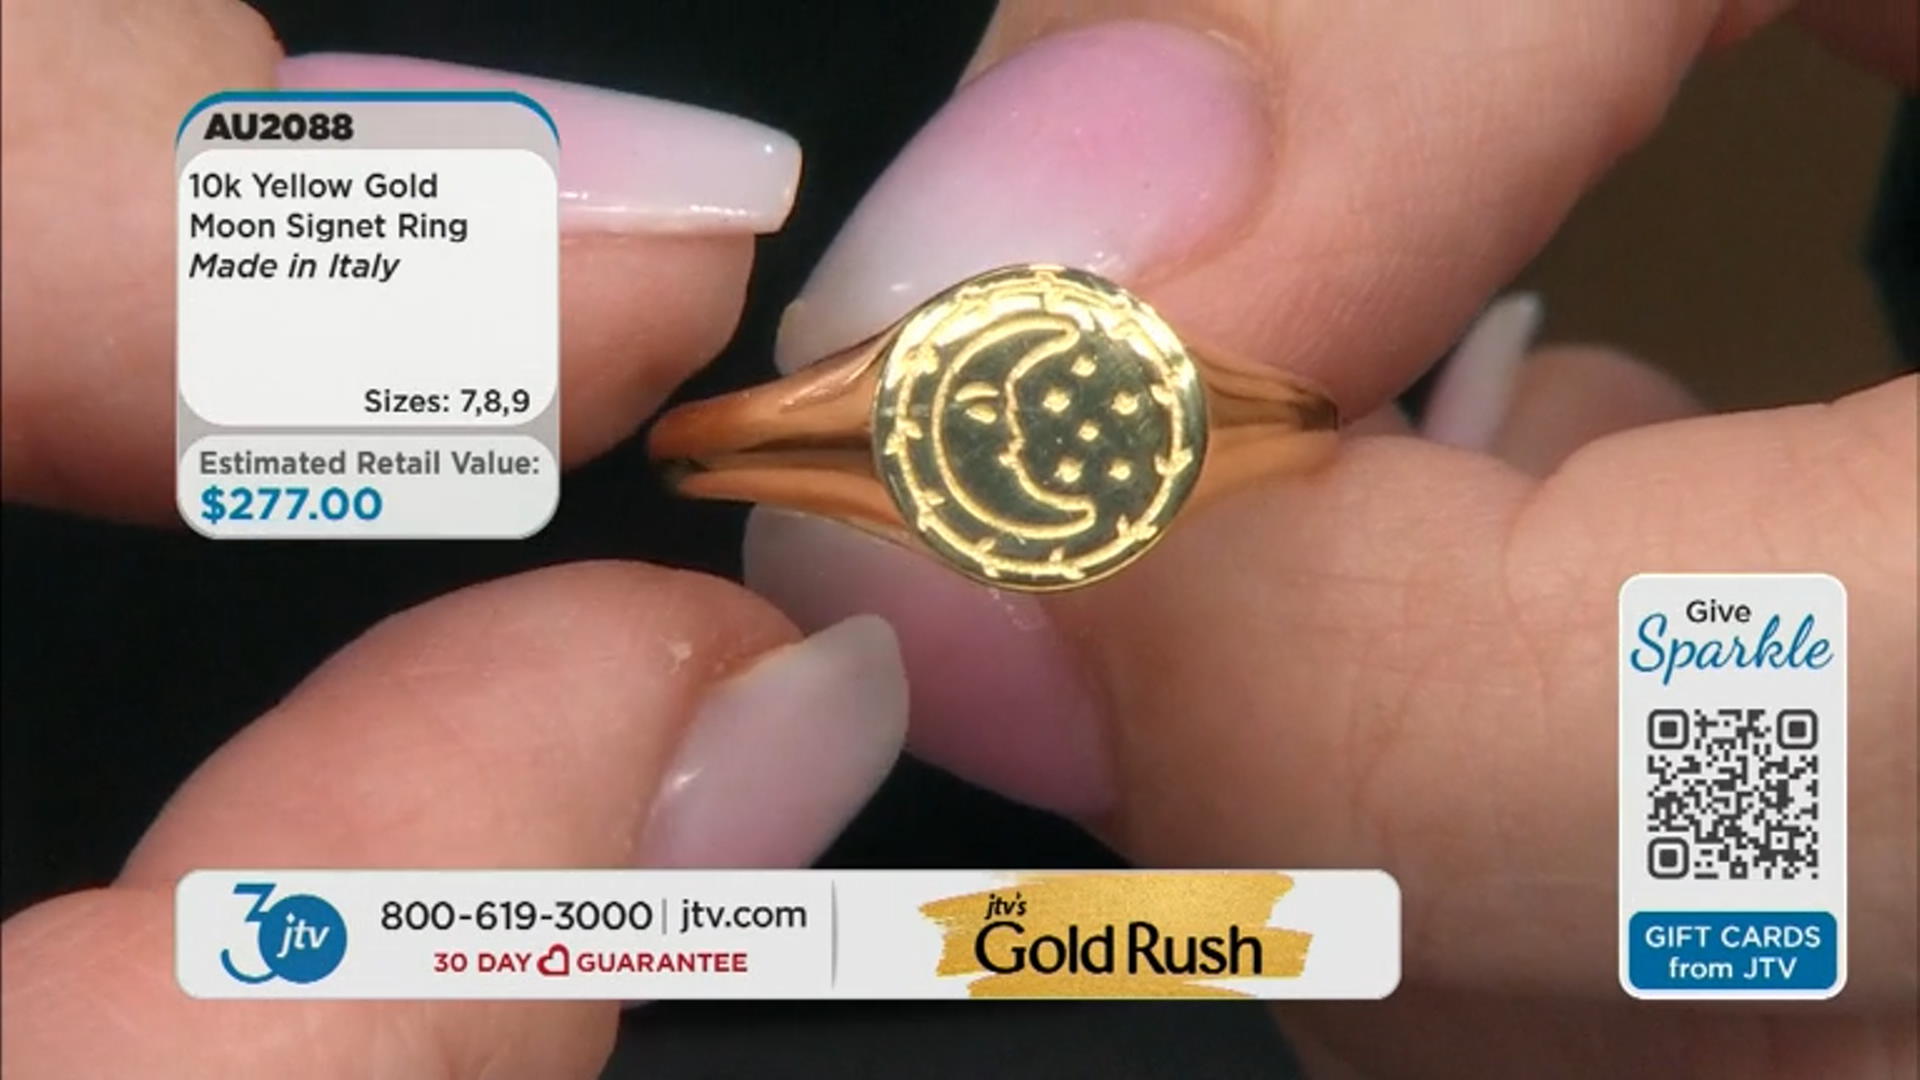 10k Yellow Gold Moon Signet Ring Video Thumbnail